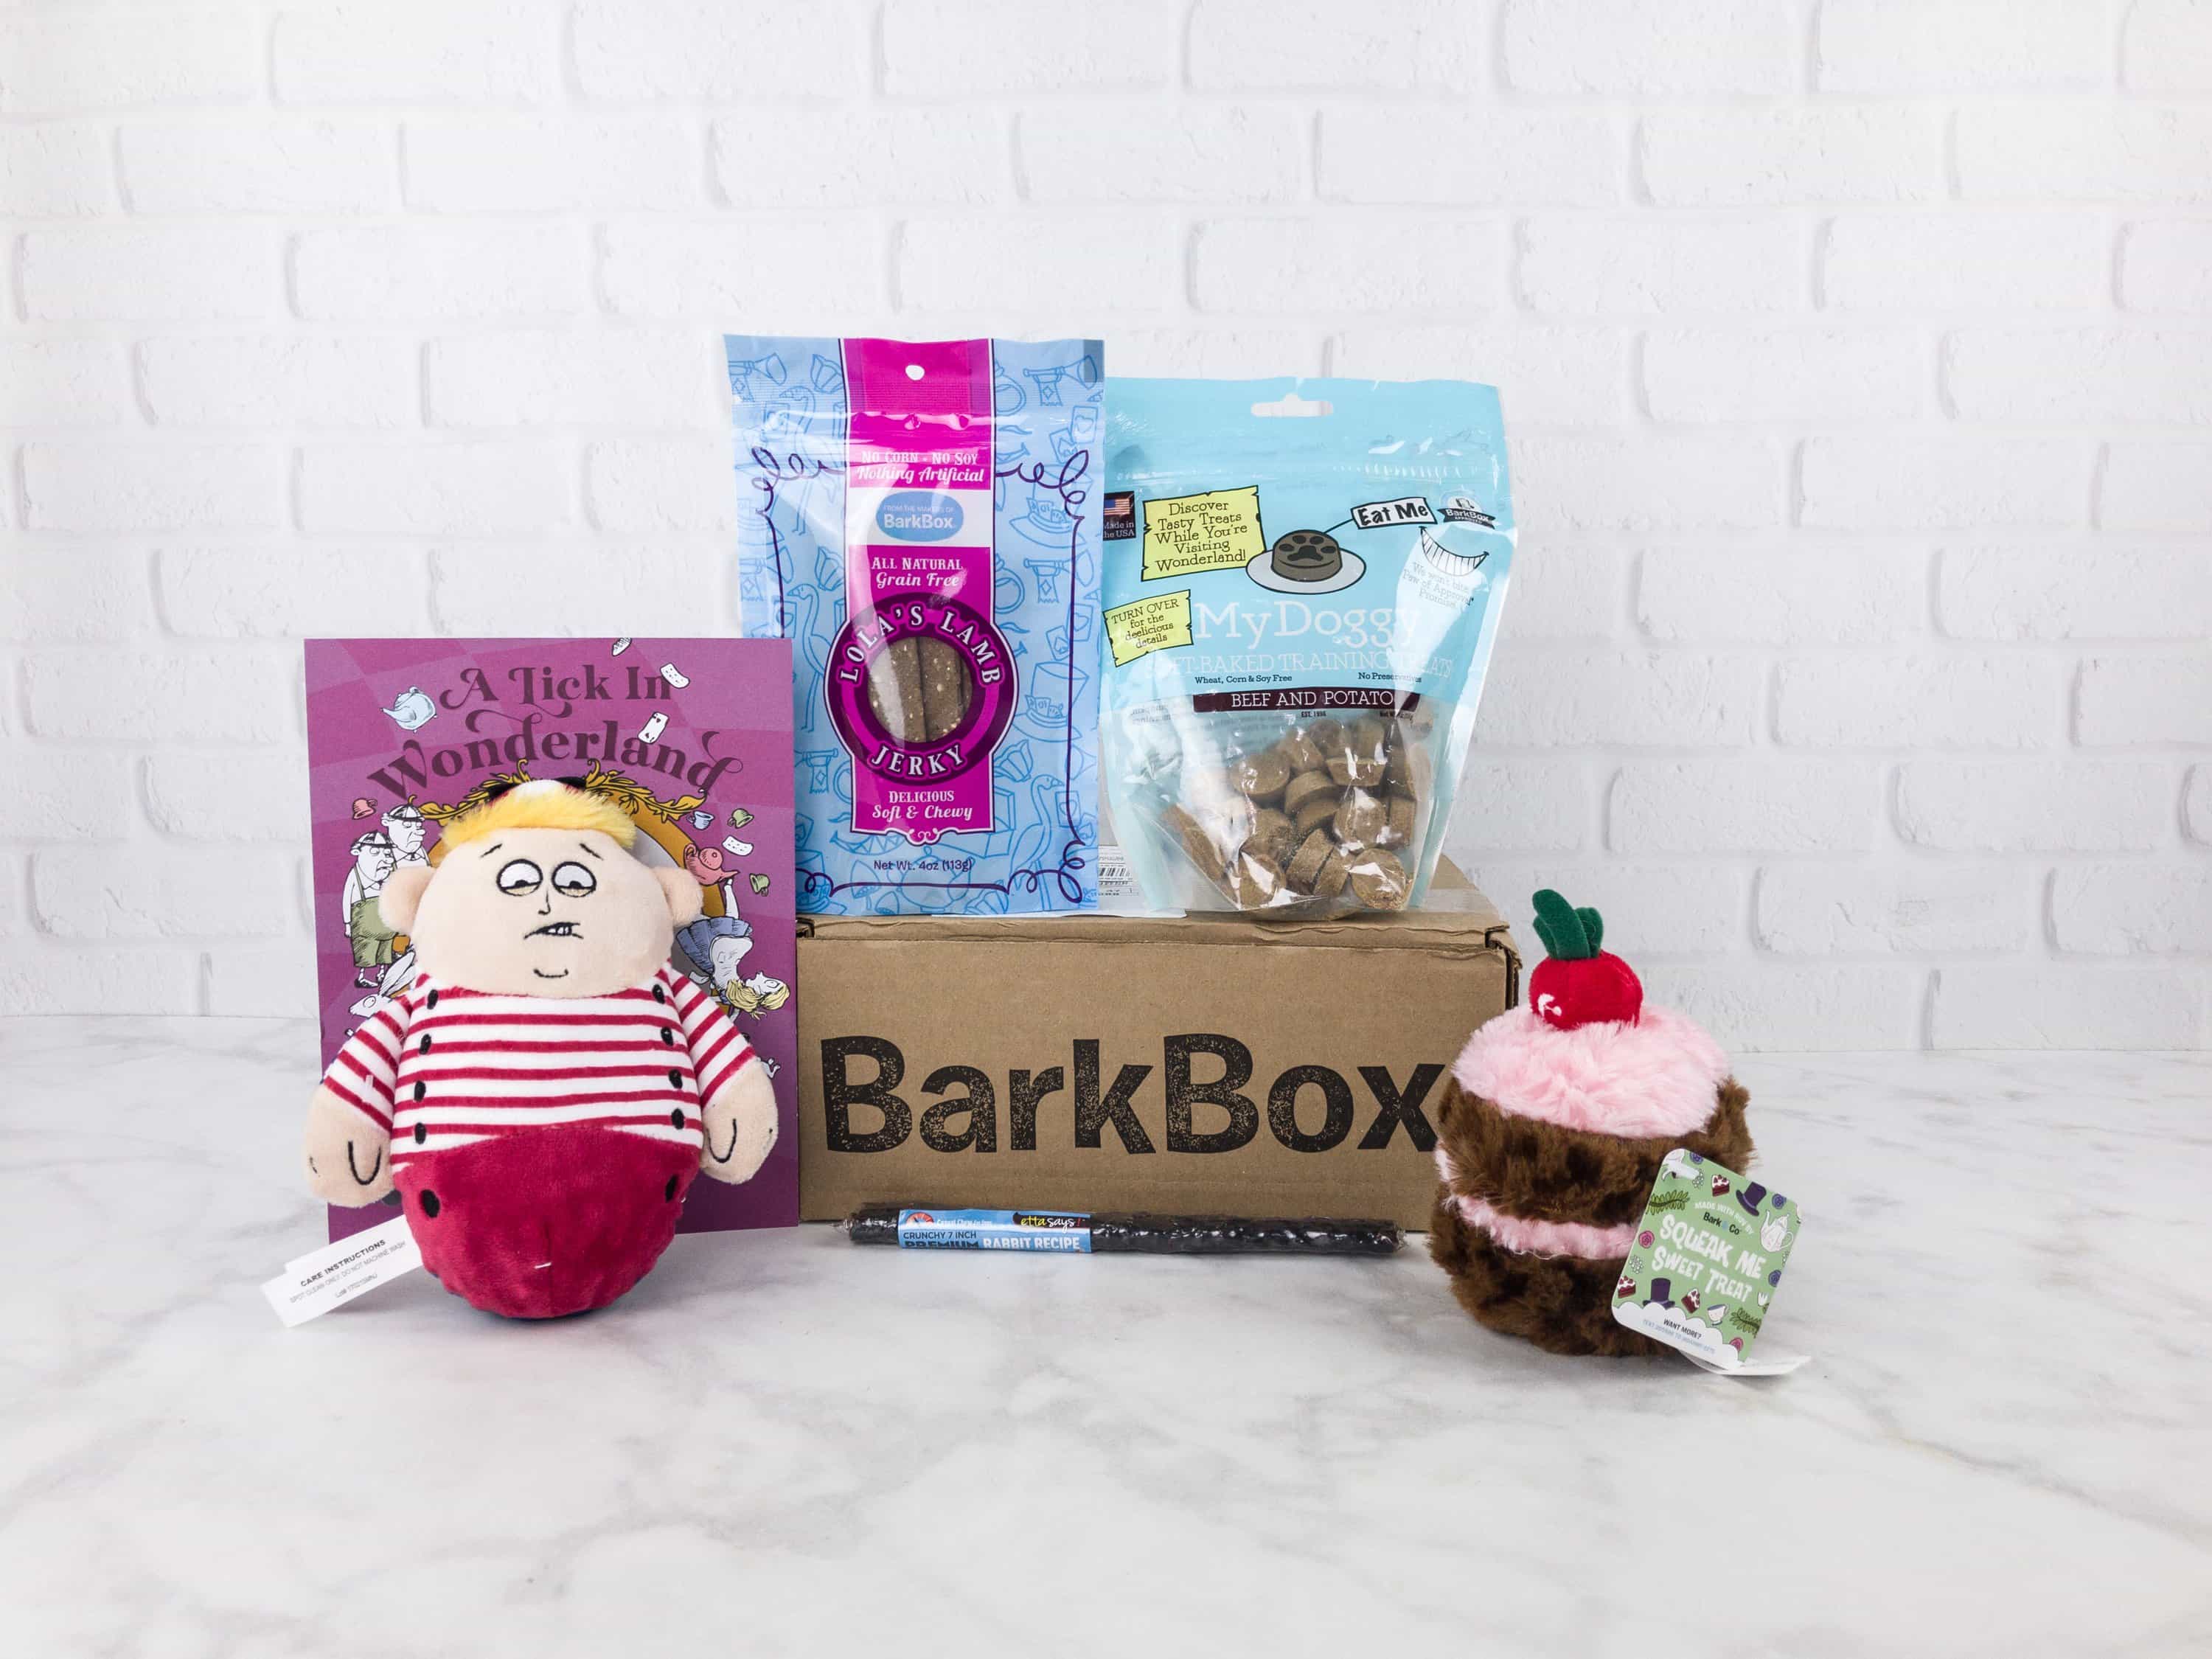 Barkbox July 2017 Subscription Box